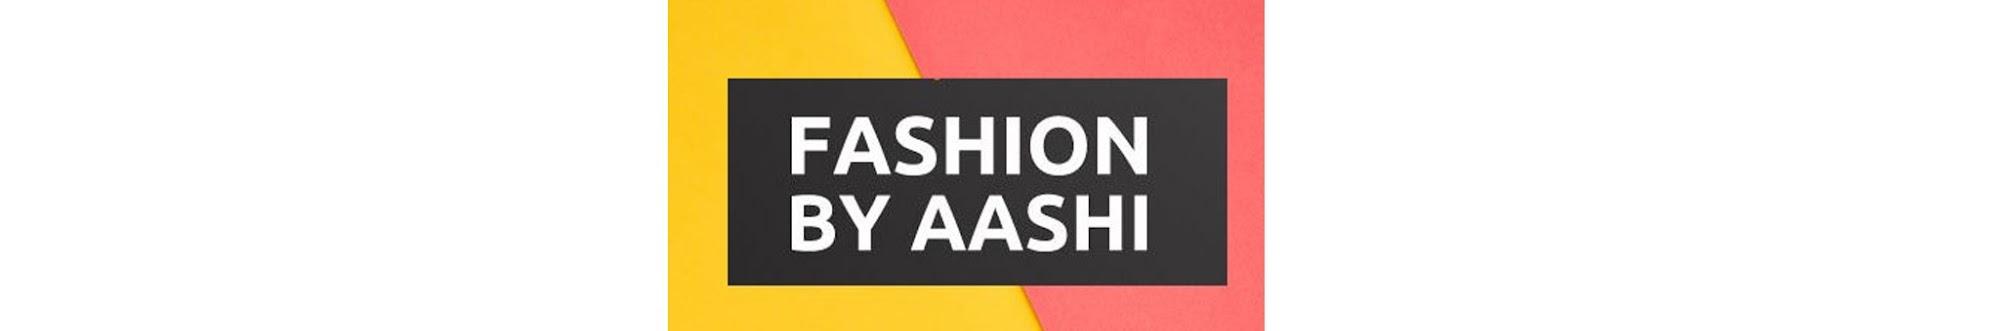 Fashion By Aashi